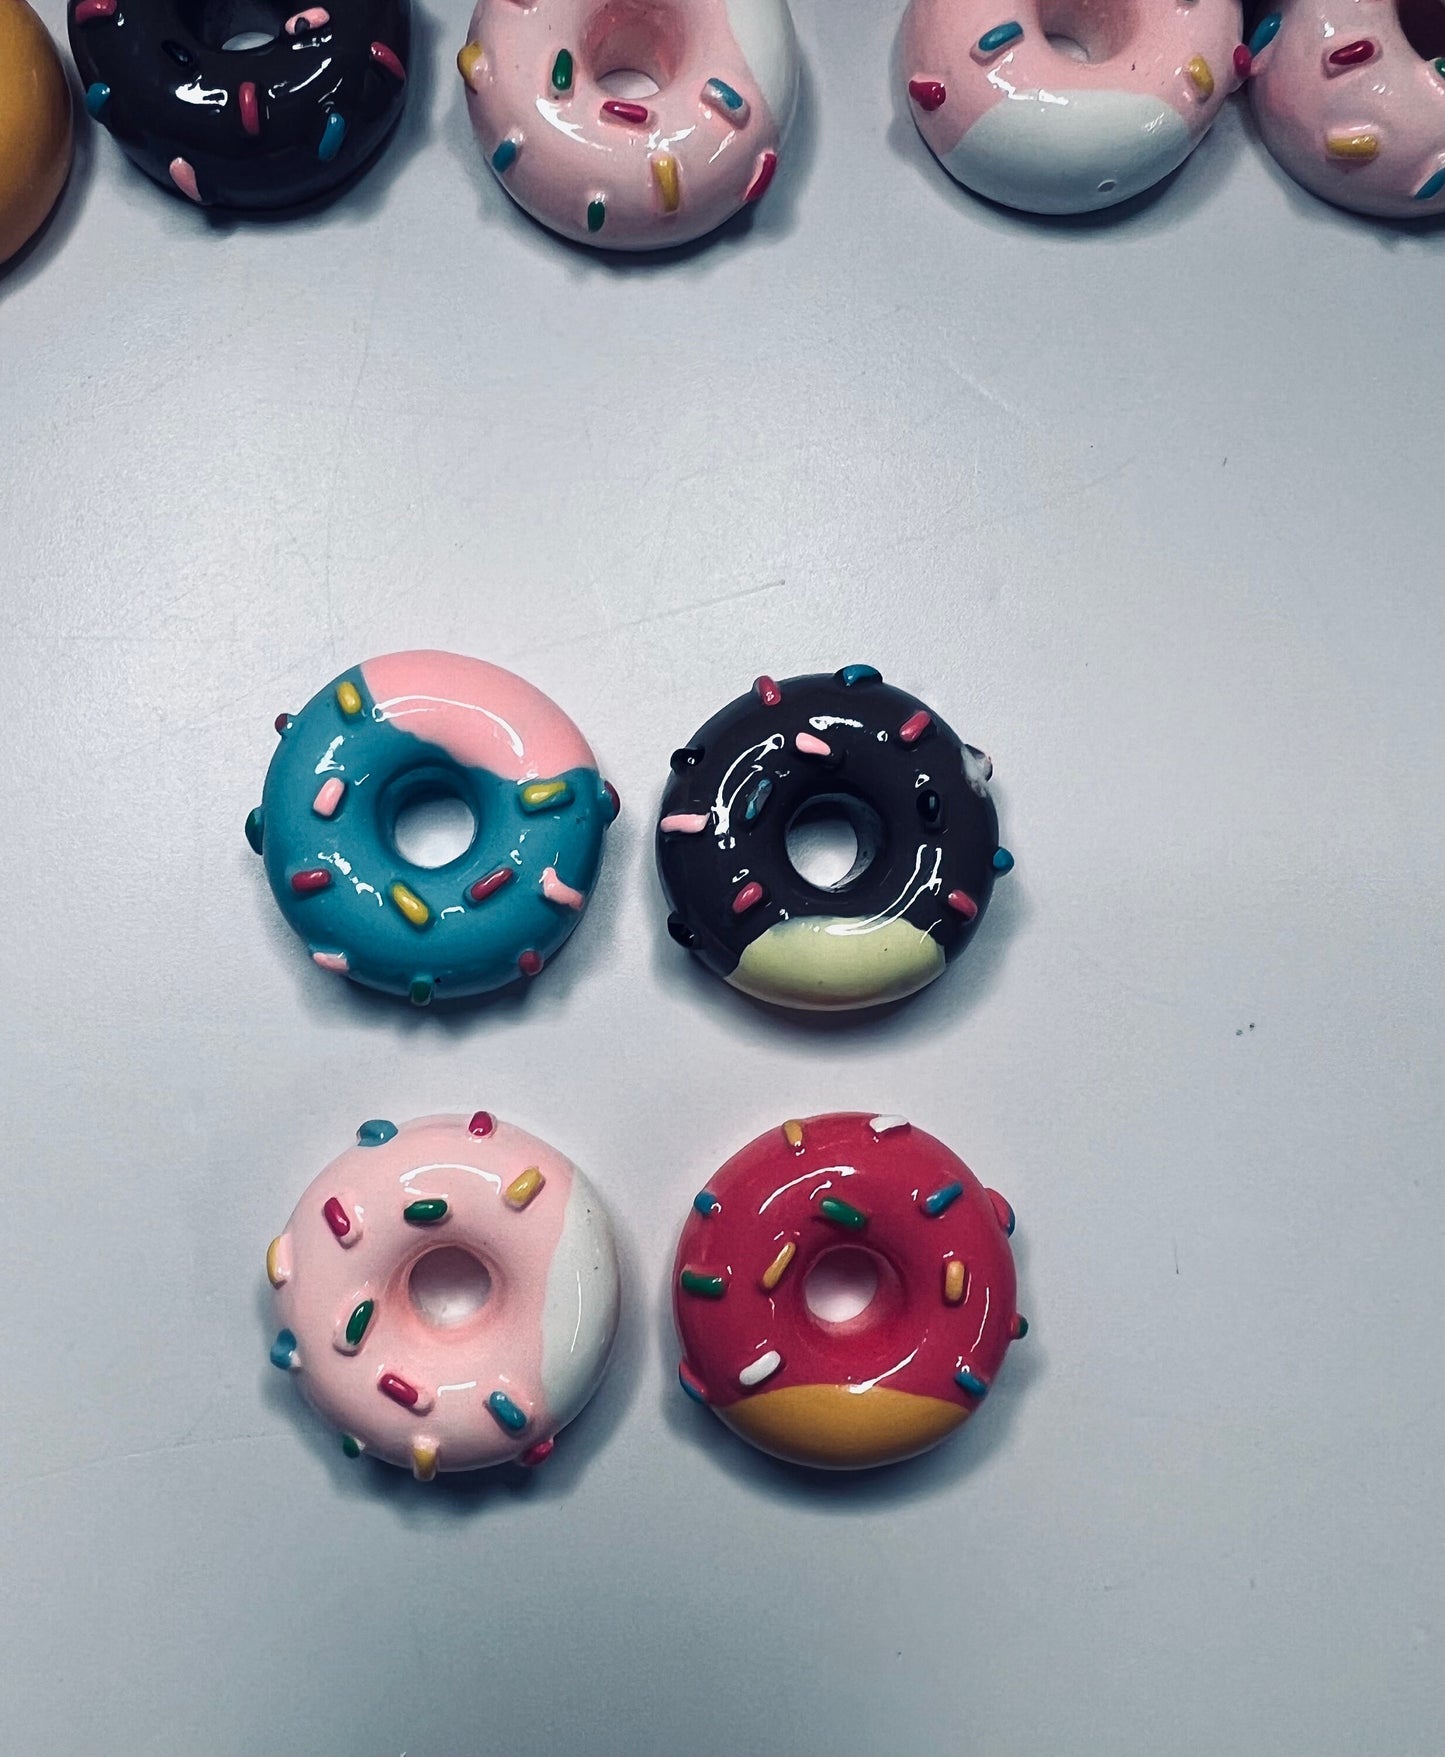 Miniature Donut Trinket-Baking Trinkets-Doughnut Mini Object-Dollhouse Food Miniature Objects -Doodads-Trinkets